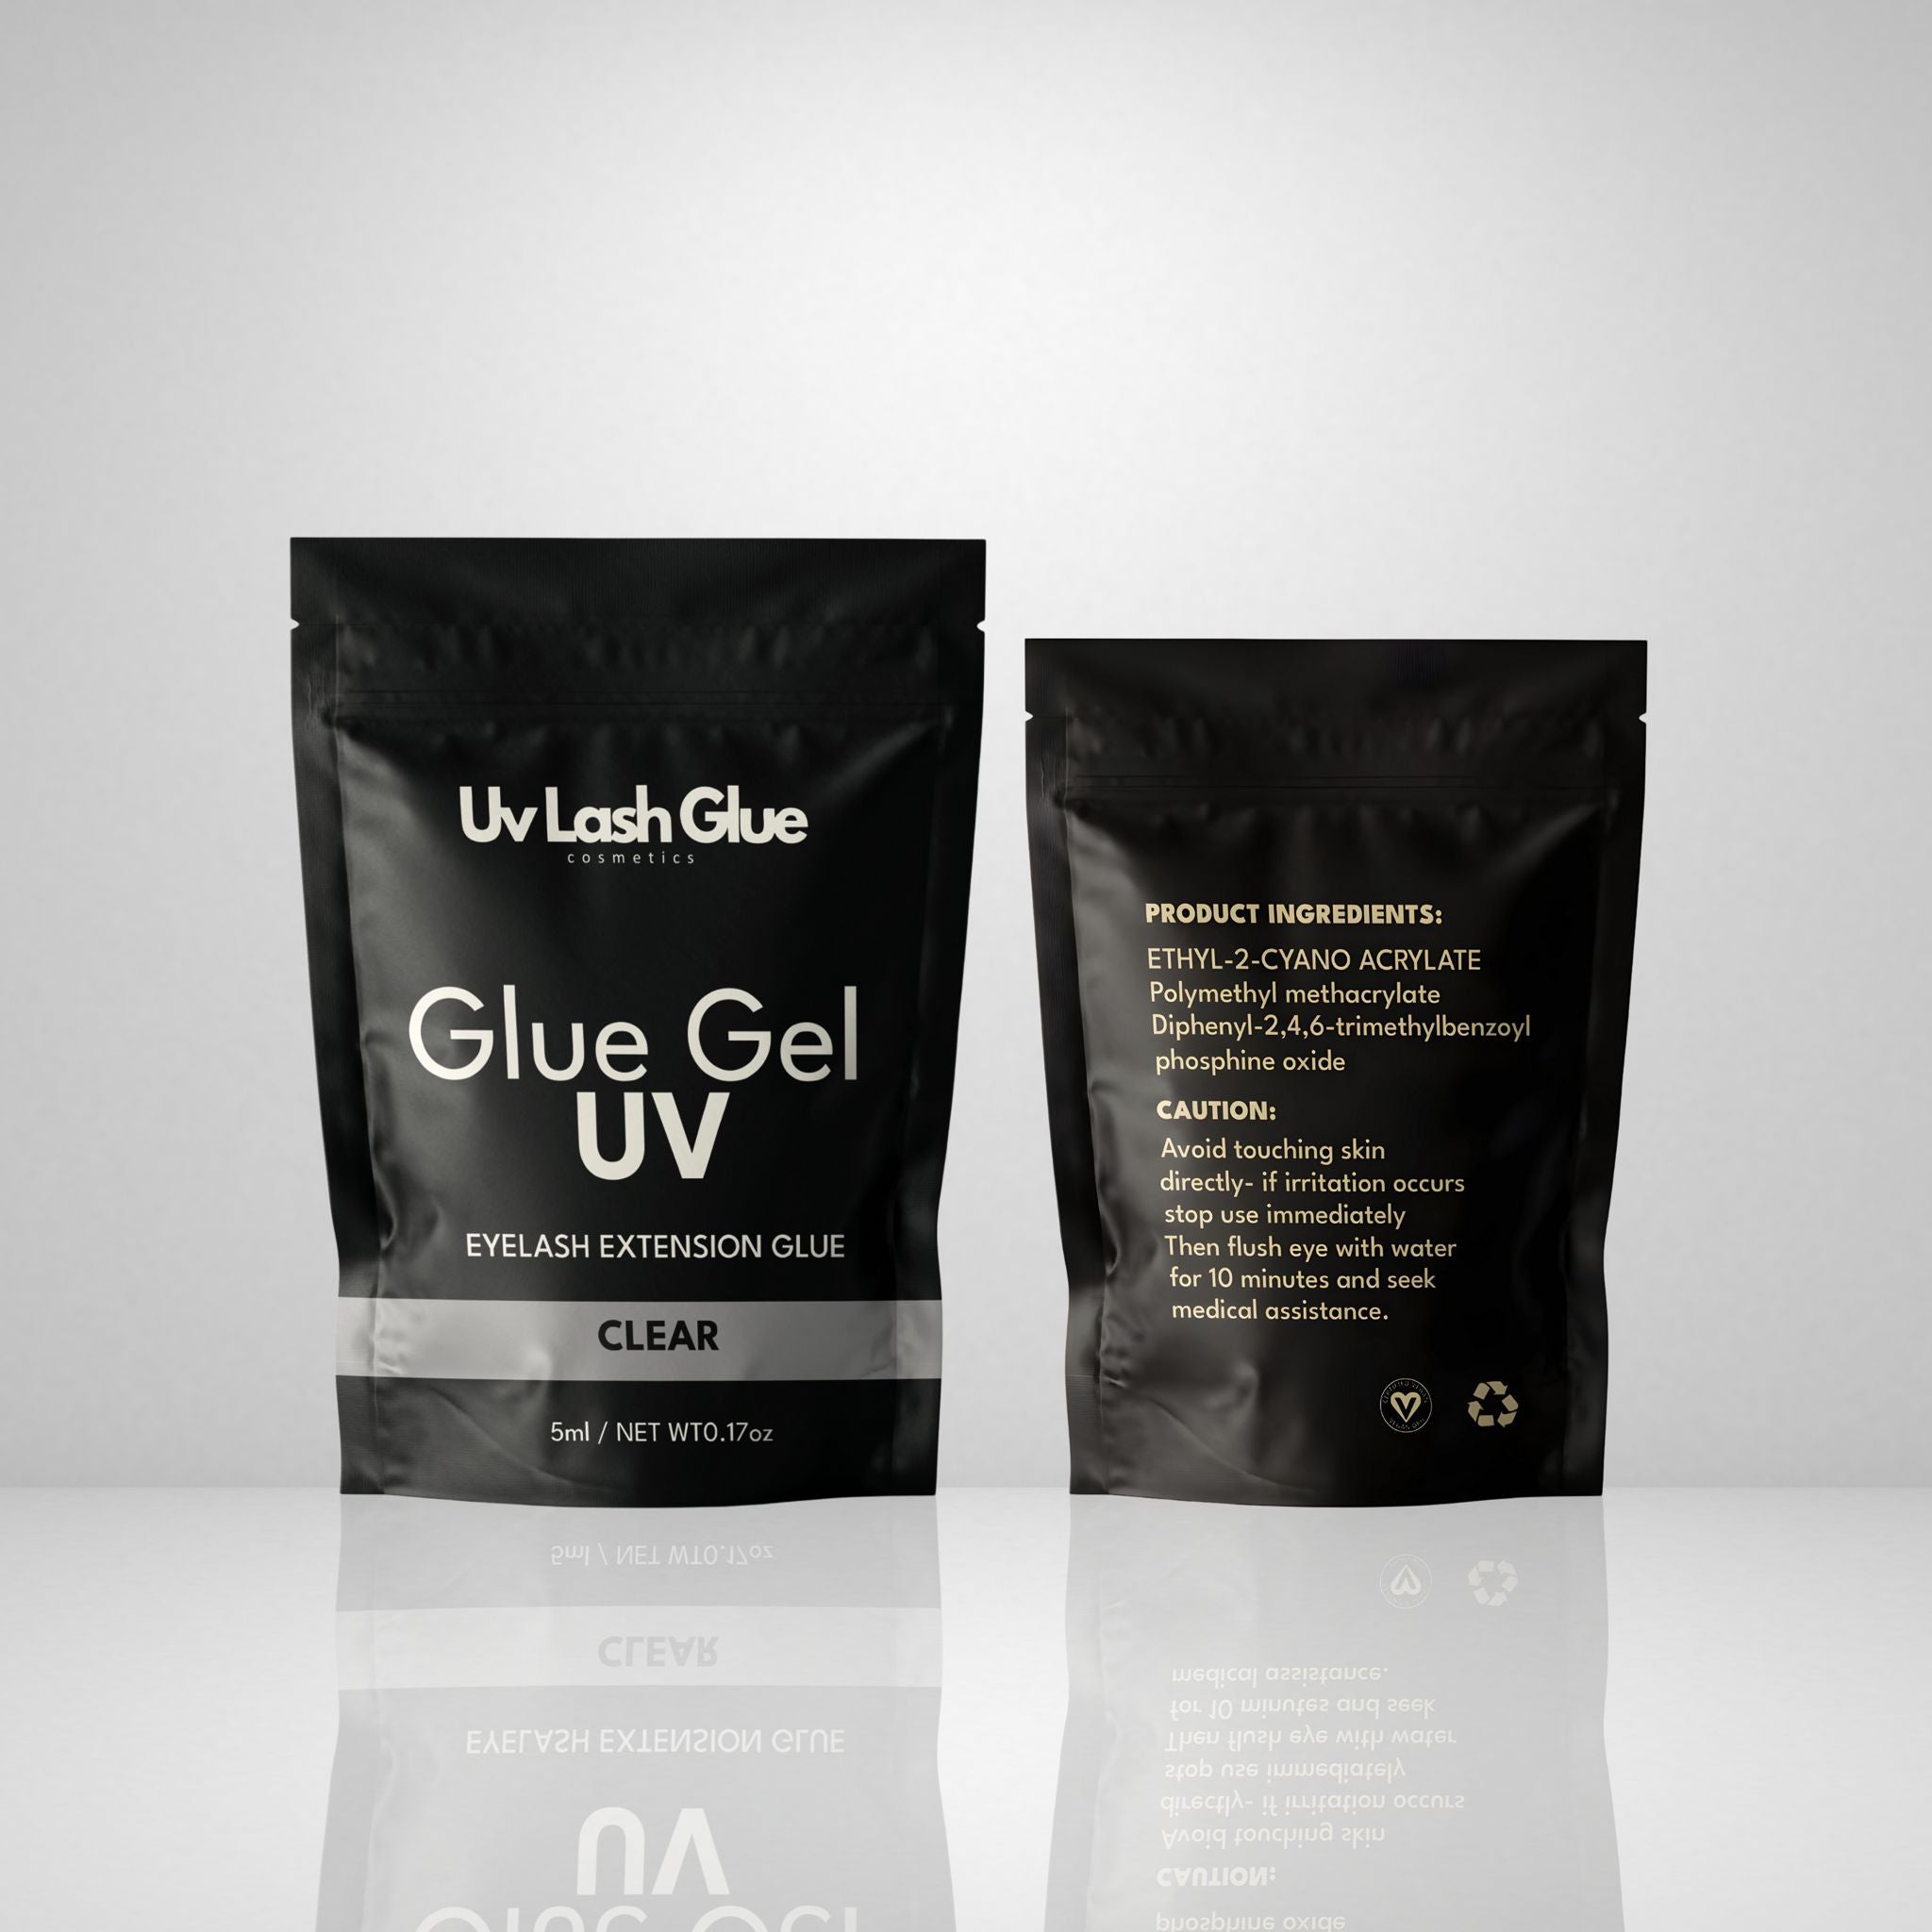 UV Lash Glue